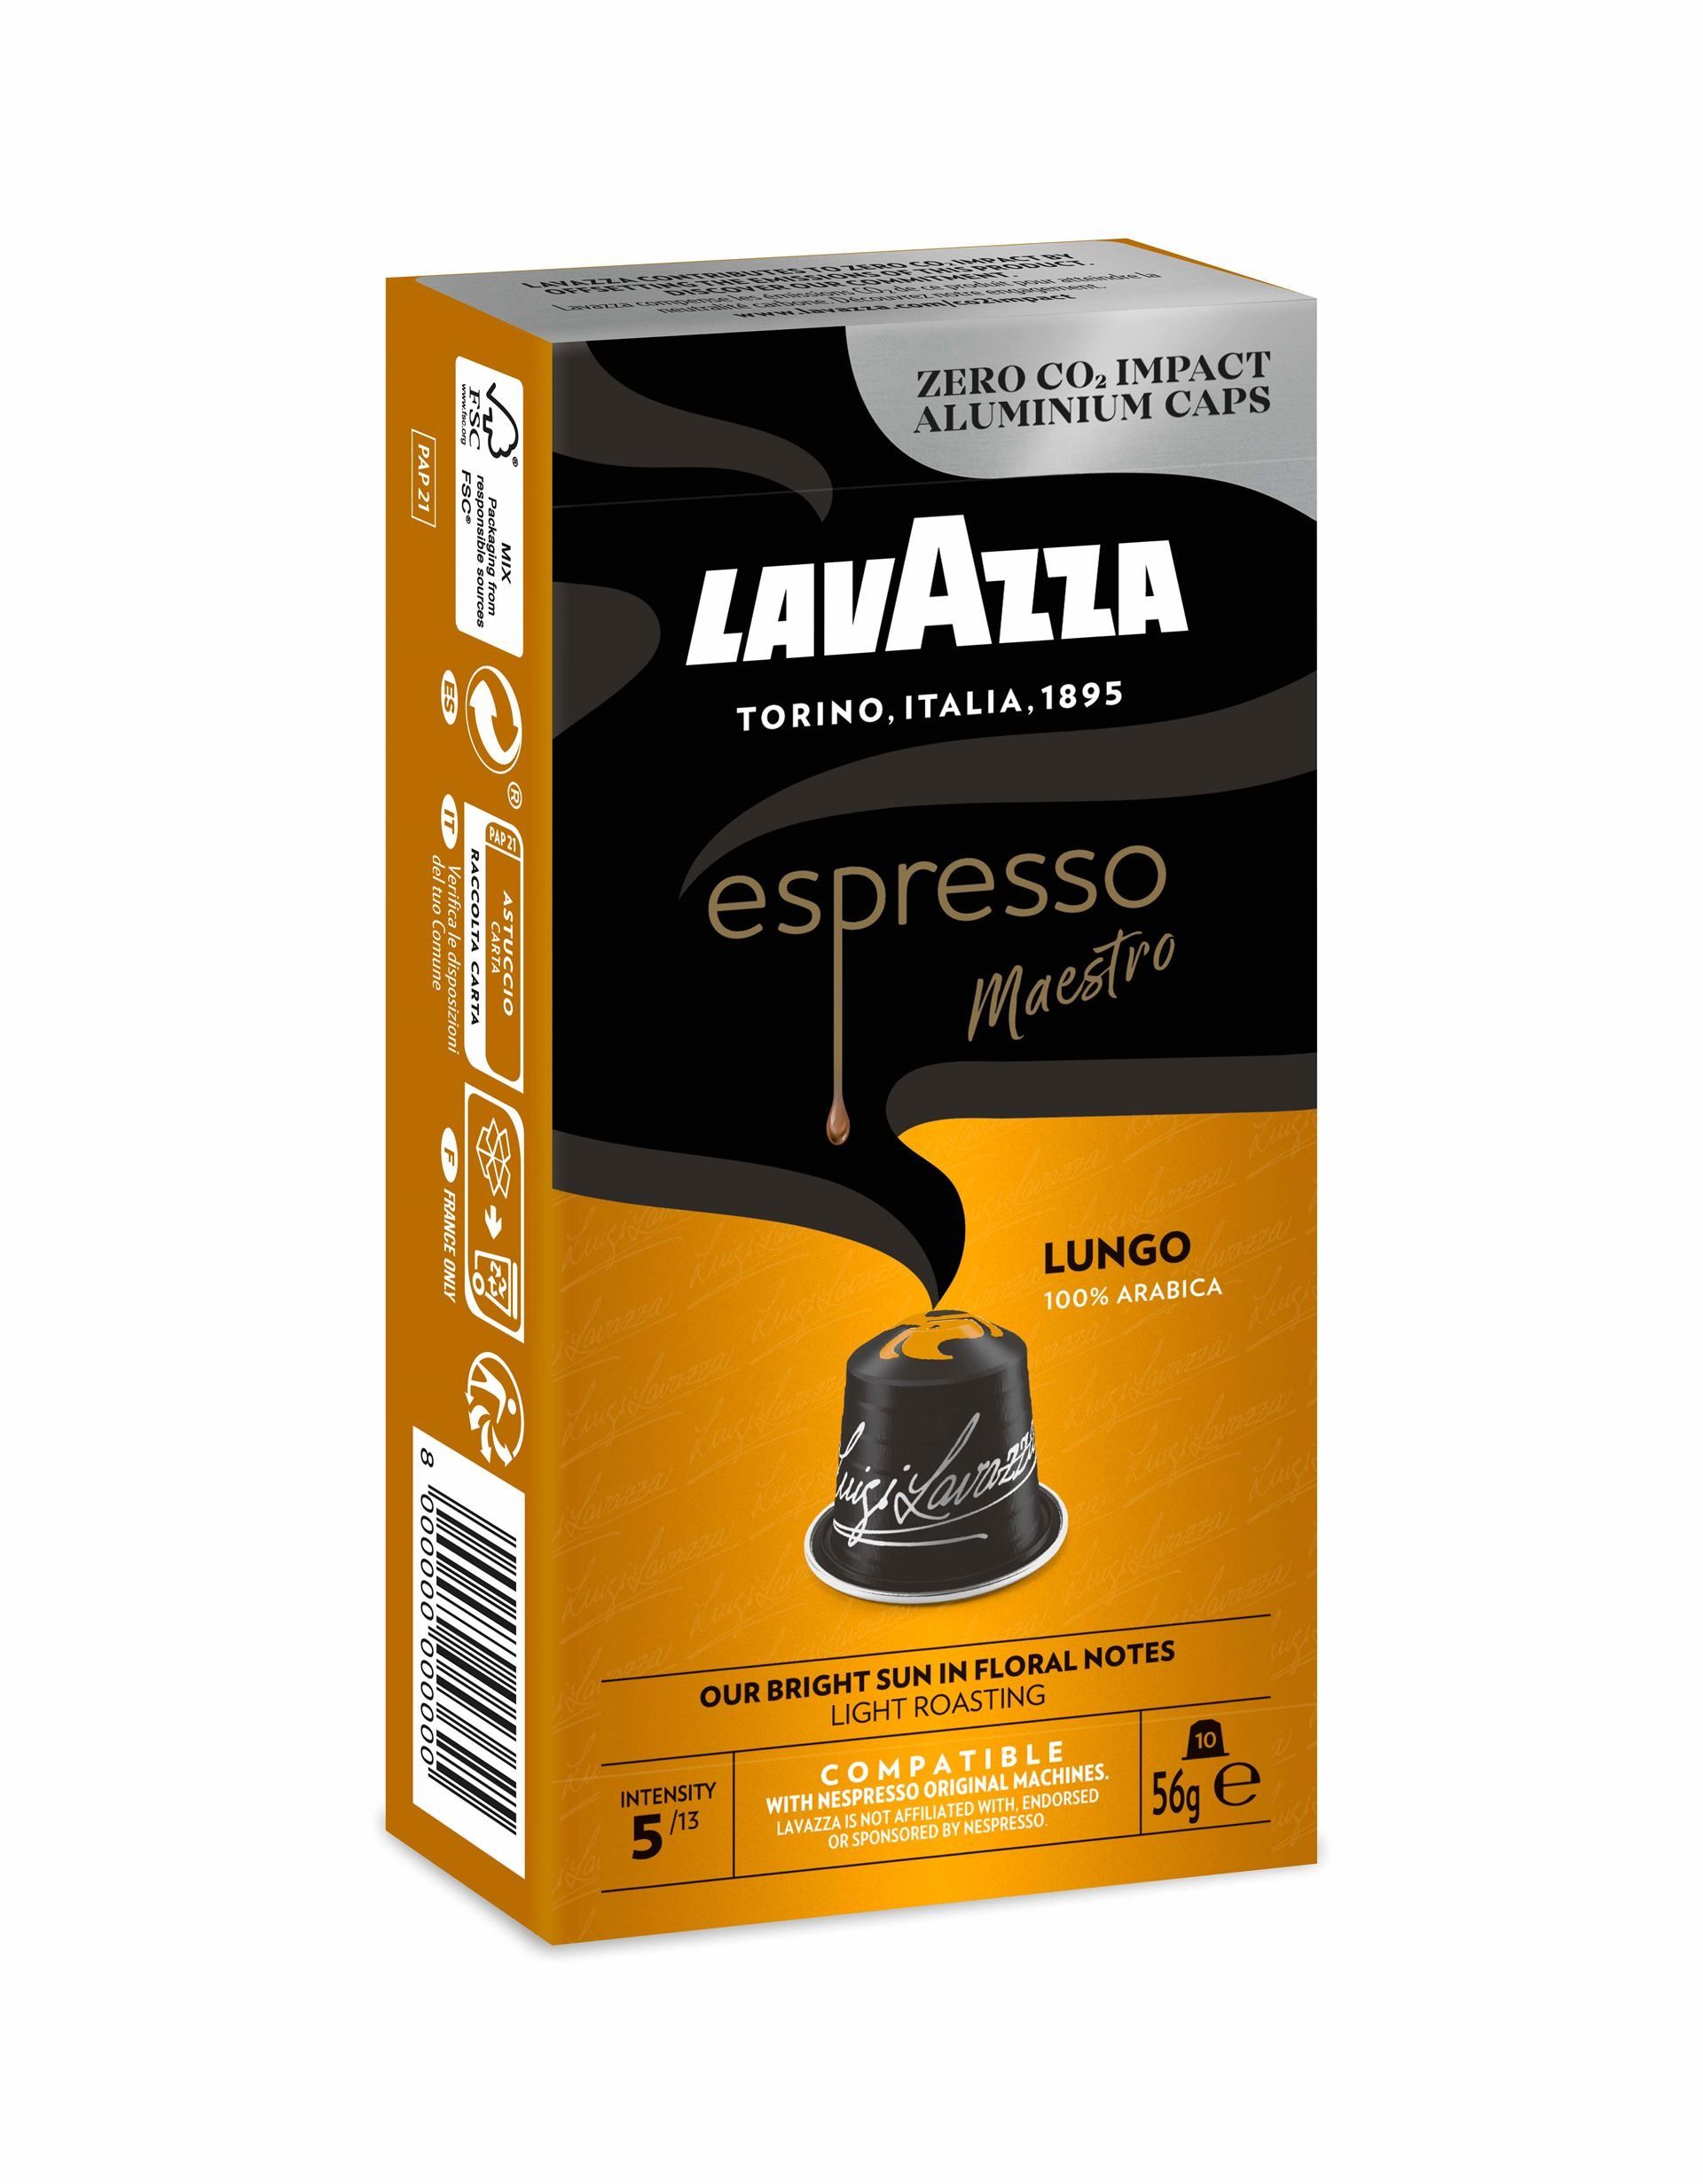 Молотый кофе в капсулах. Lavazza Espresso капсулы. Lavazza lungo капсулы. Кофе Лавацца эспрессо маэстро в капсулах. Капсулы Лавацца эспрессо маэстро.